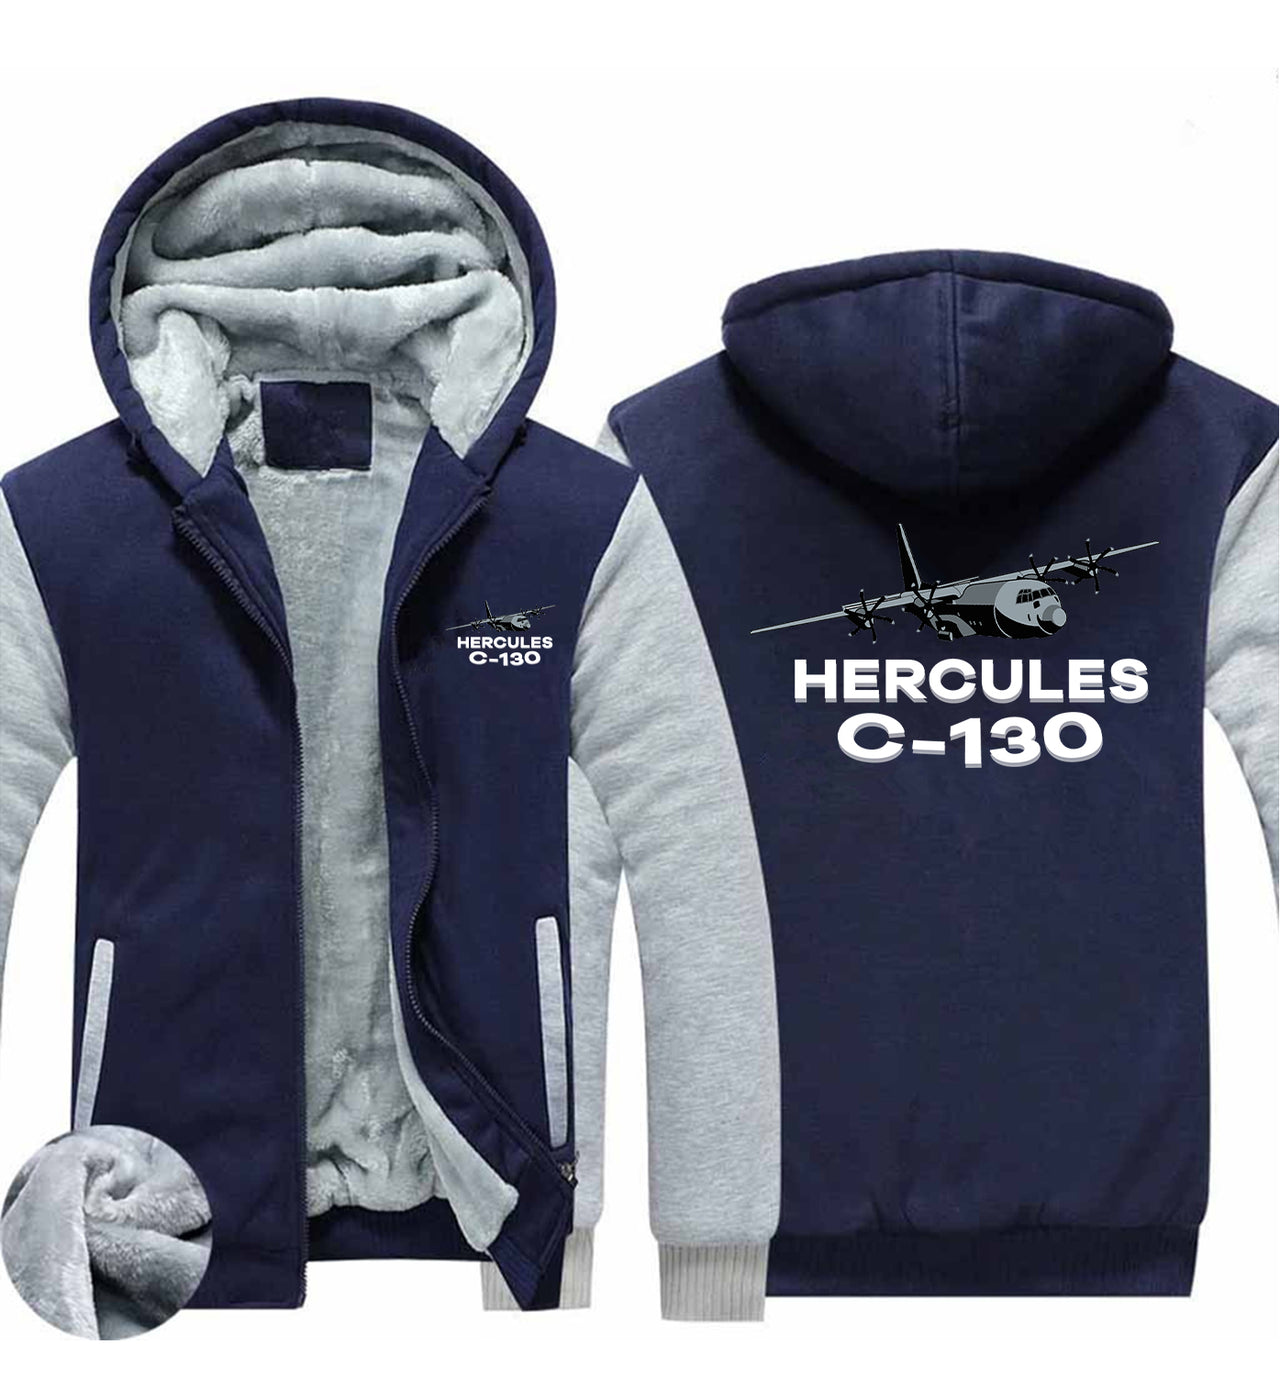 The Hercules C130 Designed Zipped Sweatshirts